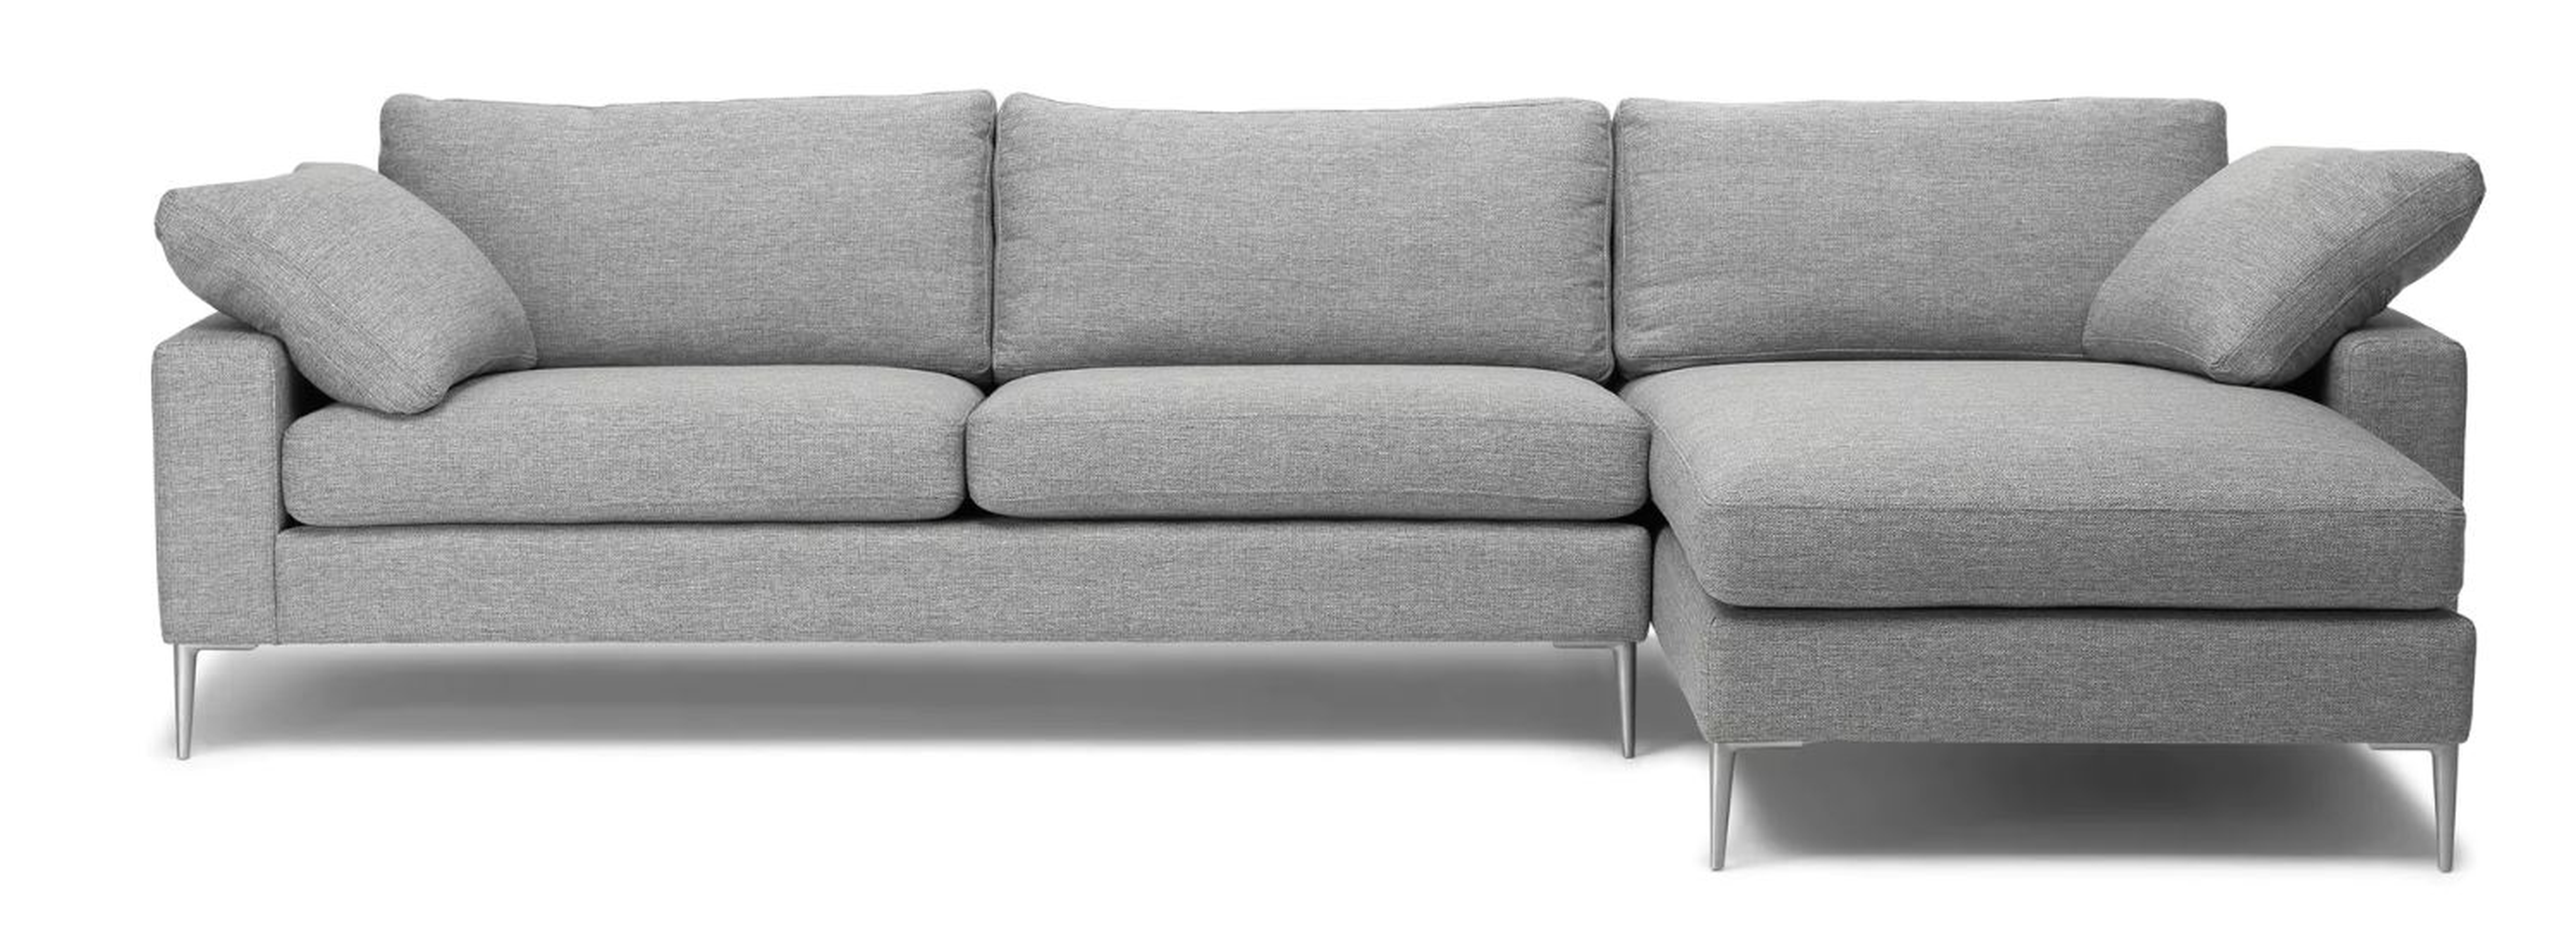 Nova Winter Gray Right Sectional Sofa - Article